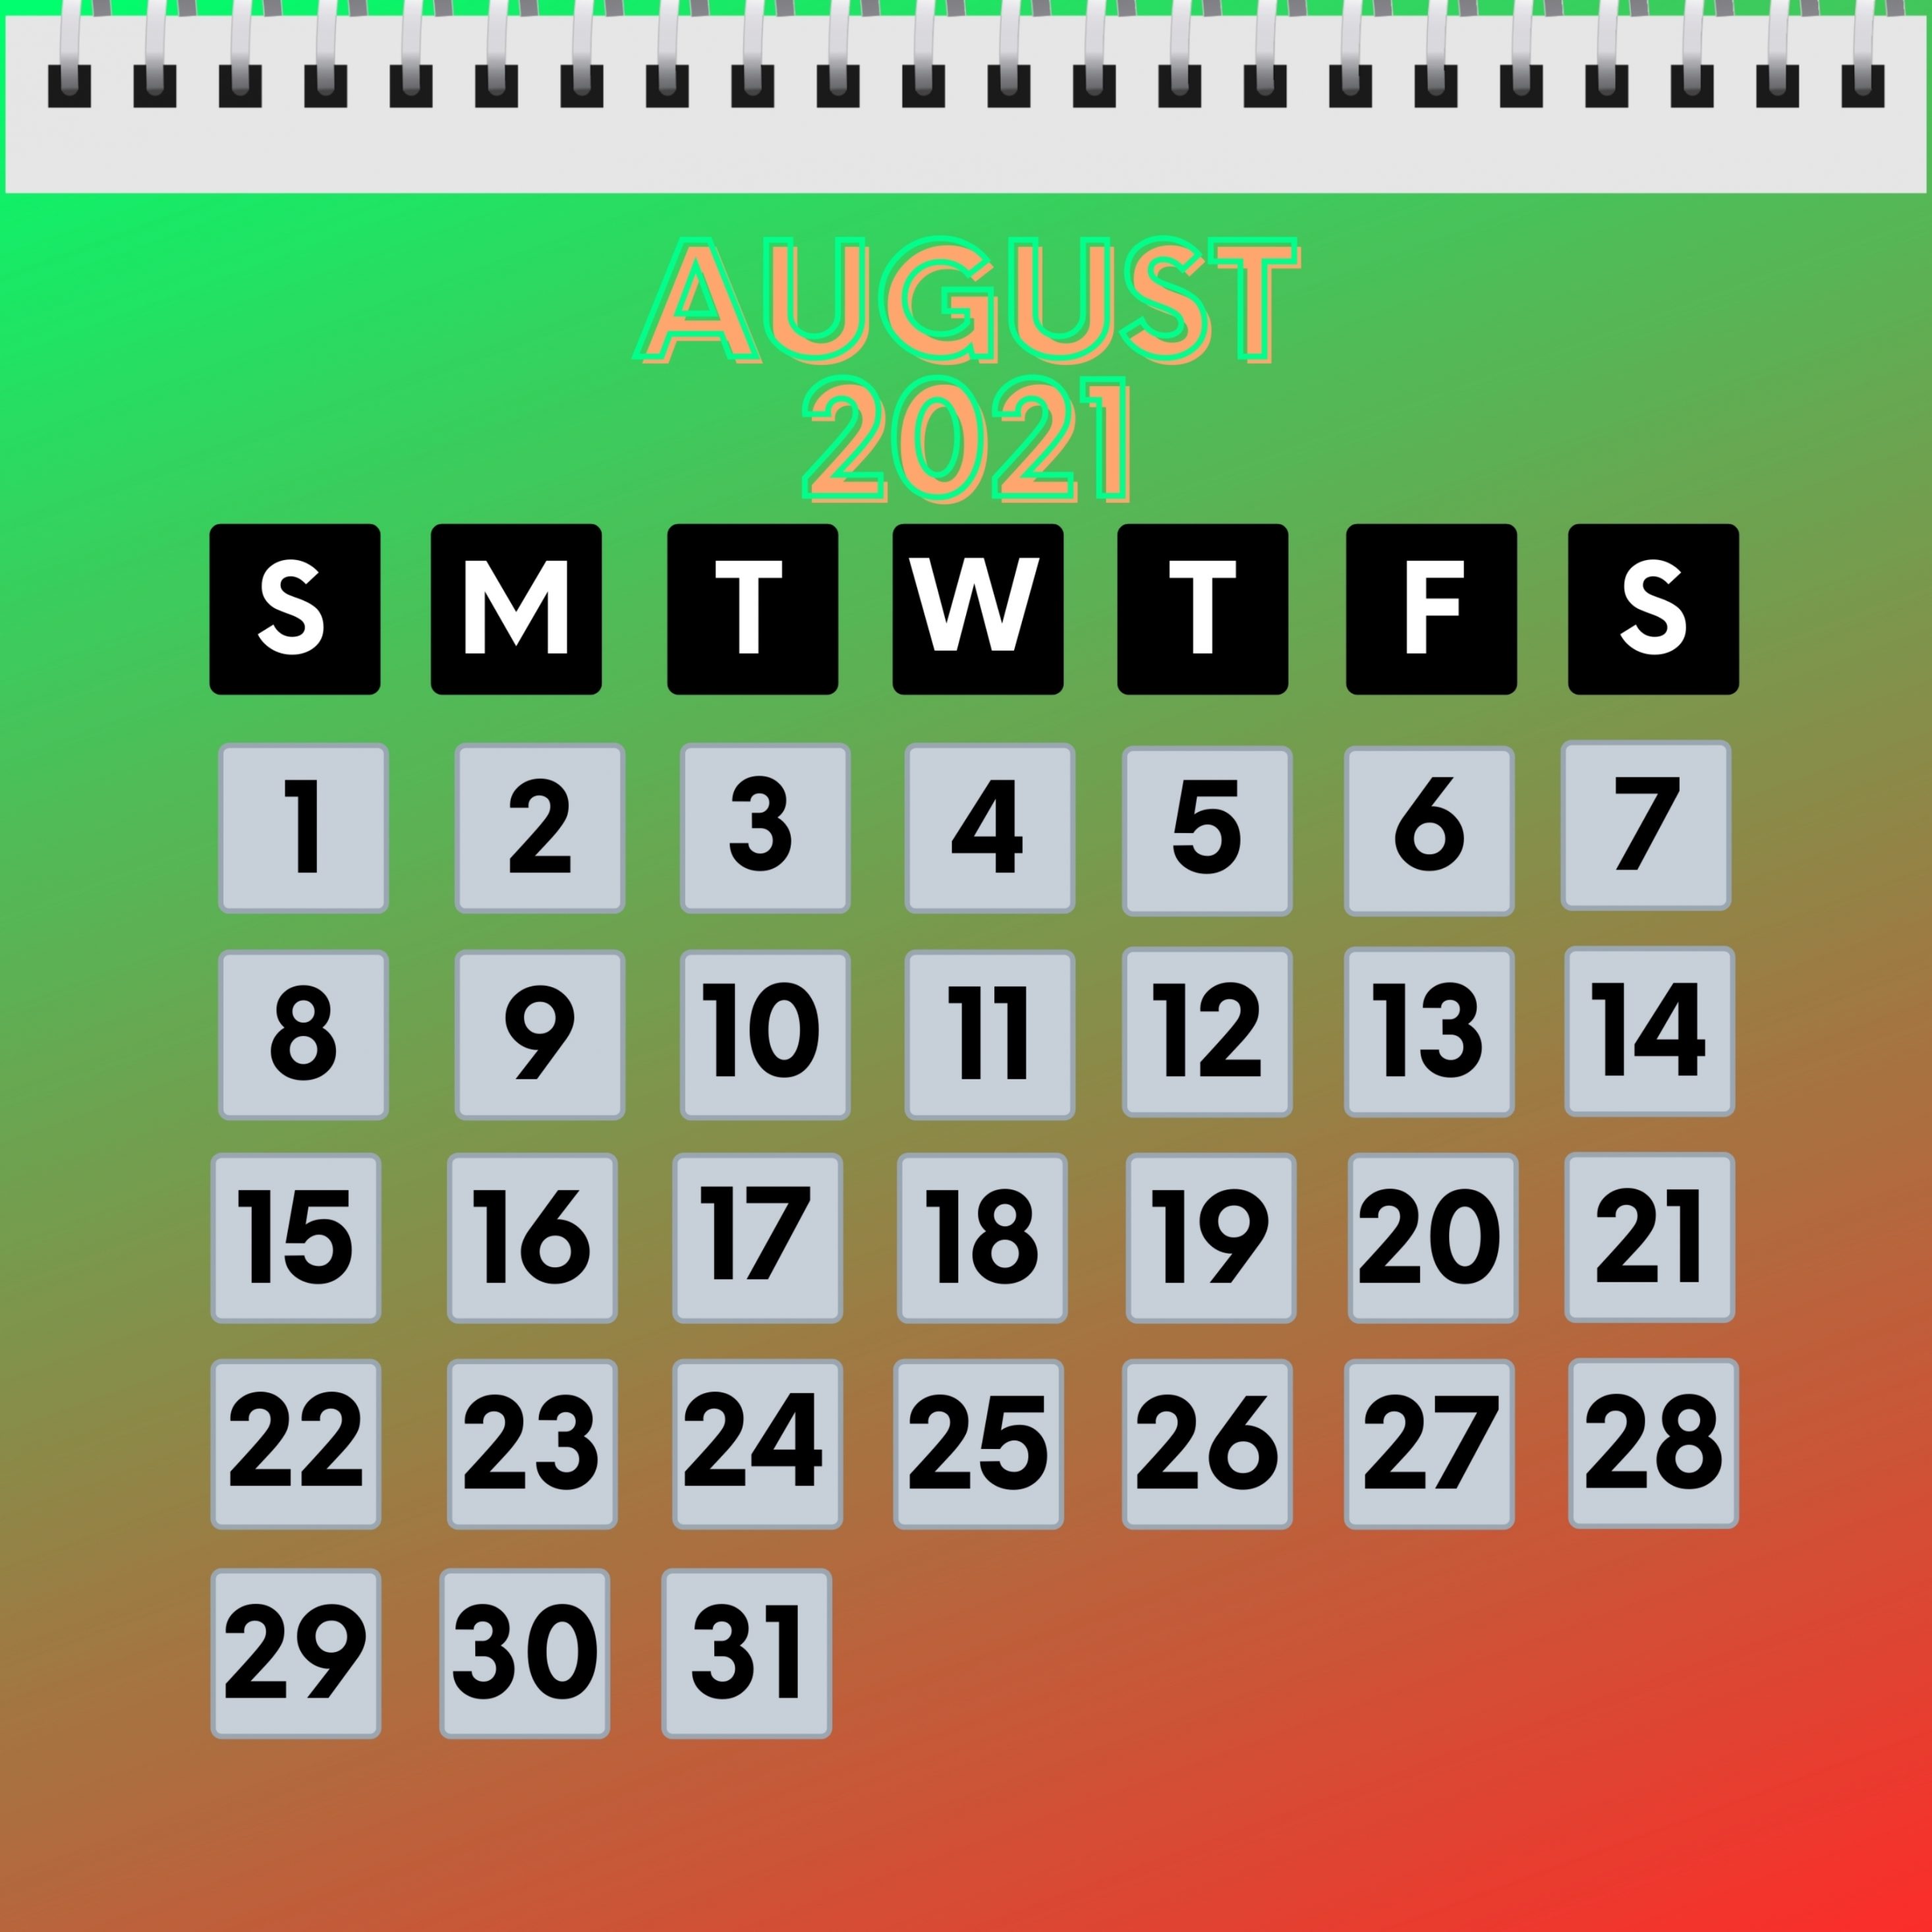 2932x2932 iPad Pro wallpaper 4k August 2021 Calendar iPad Wallpaper 2932x2932 pixels resolution